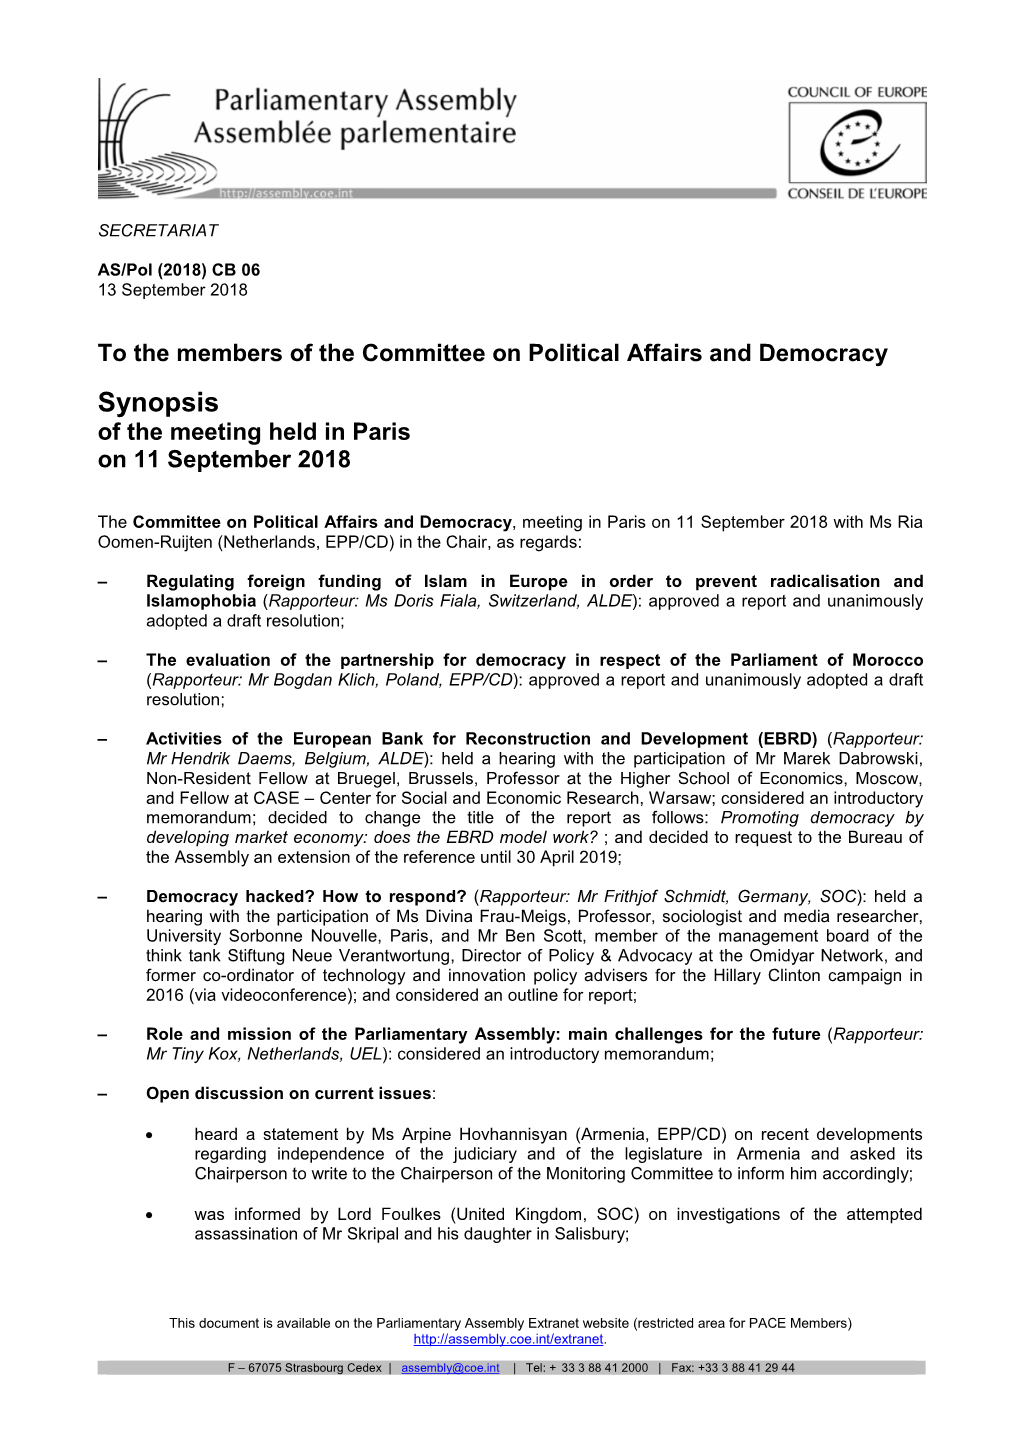 Synopsis of the Meeting Held in Paris on 11 September 2018